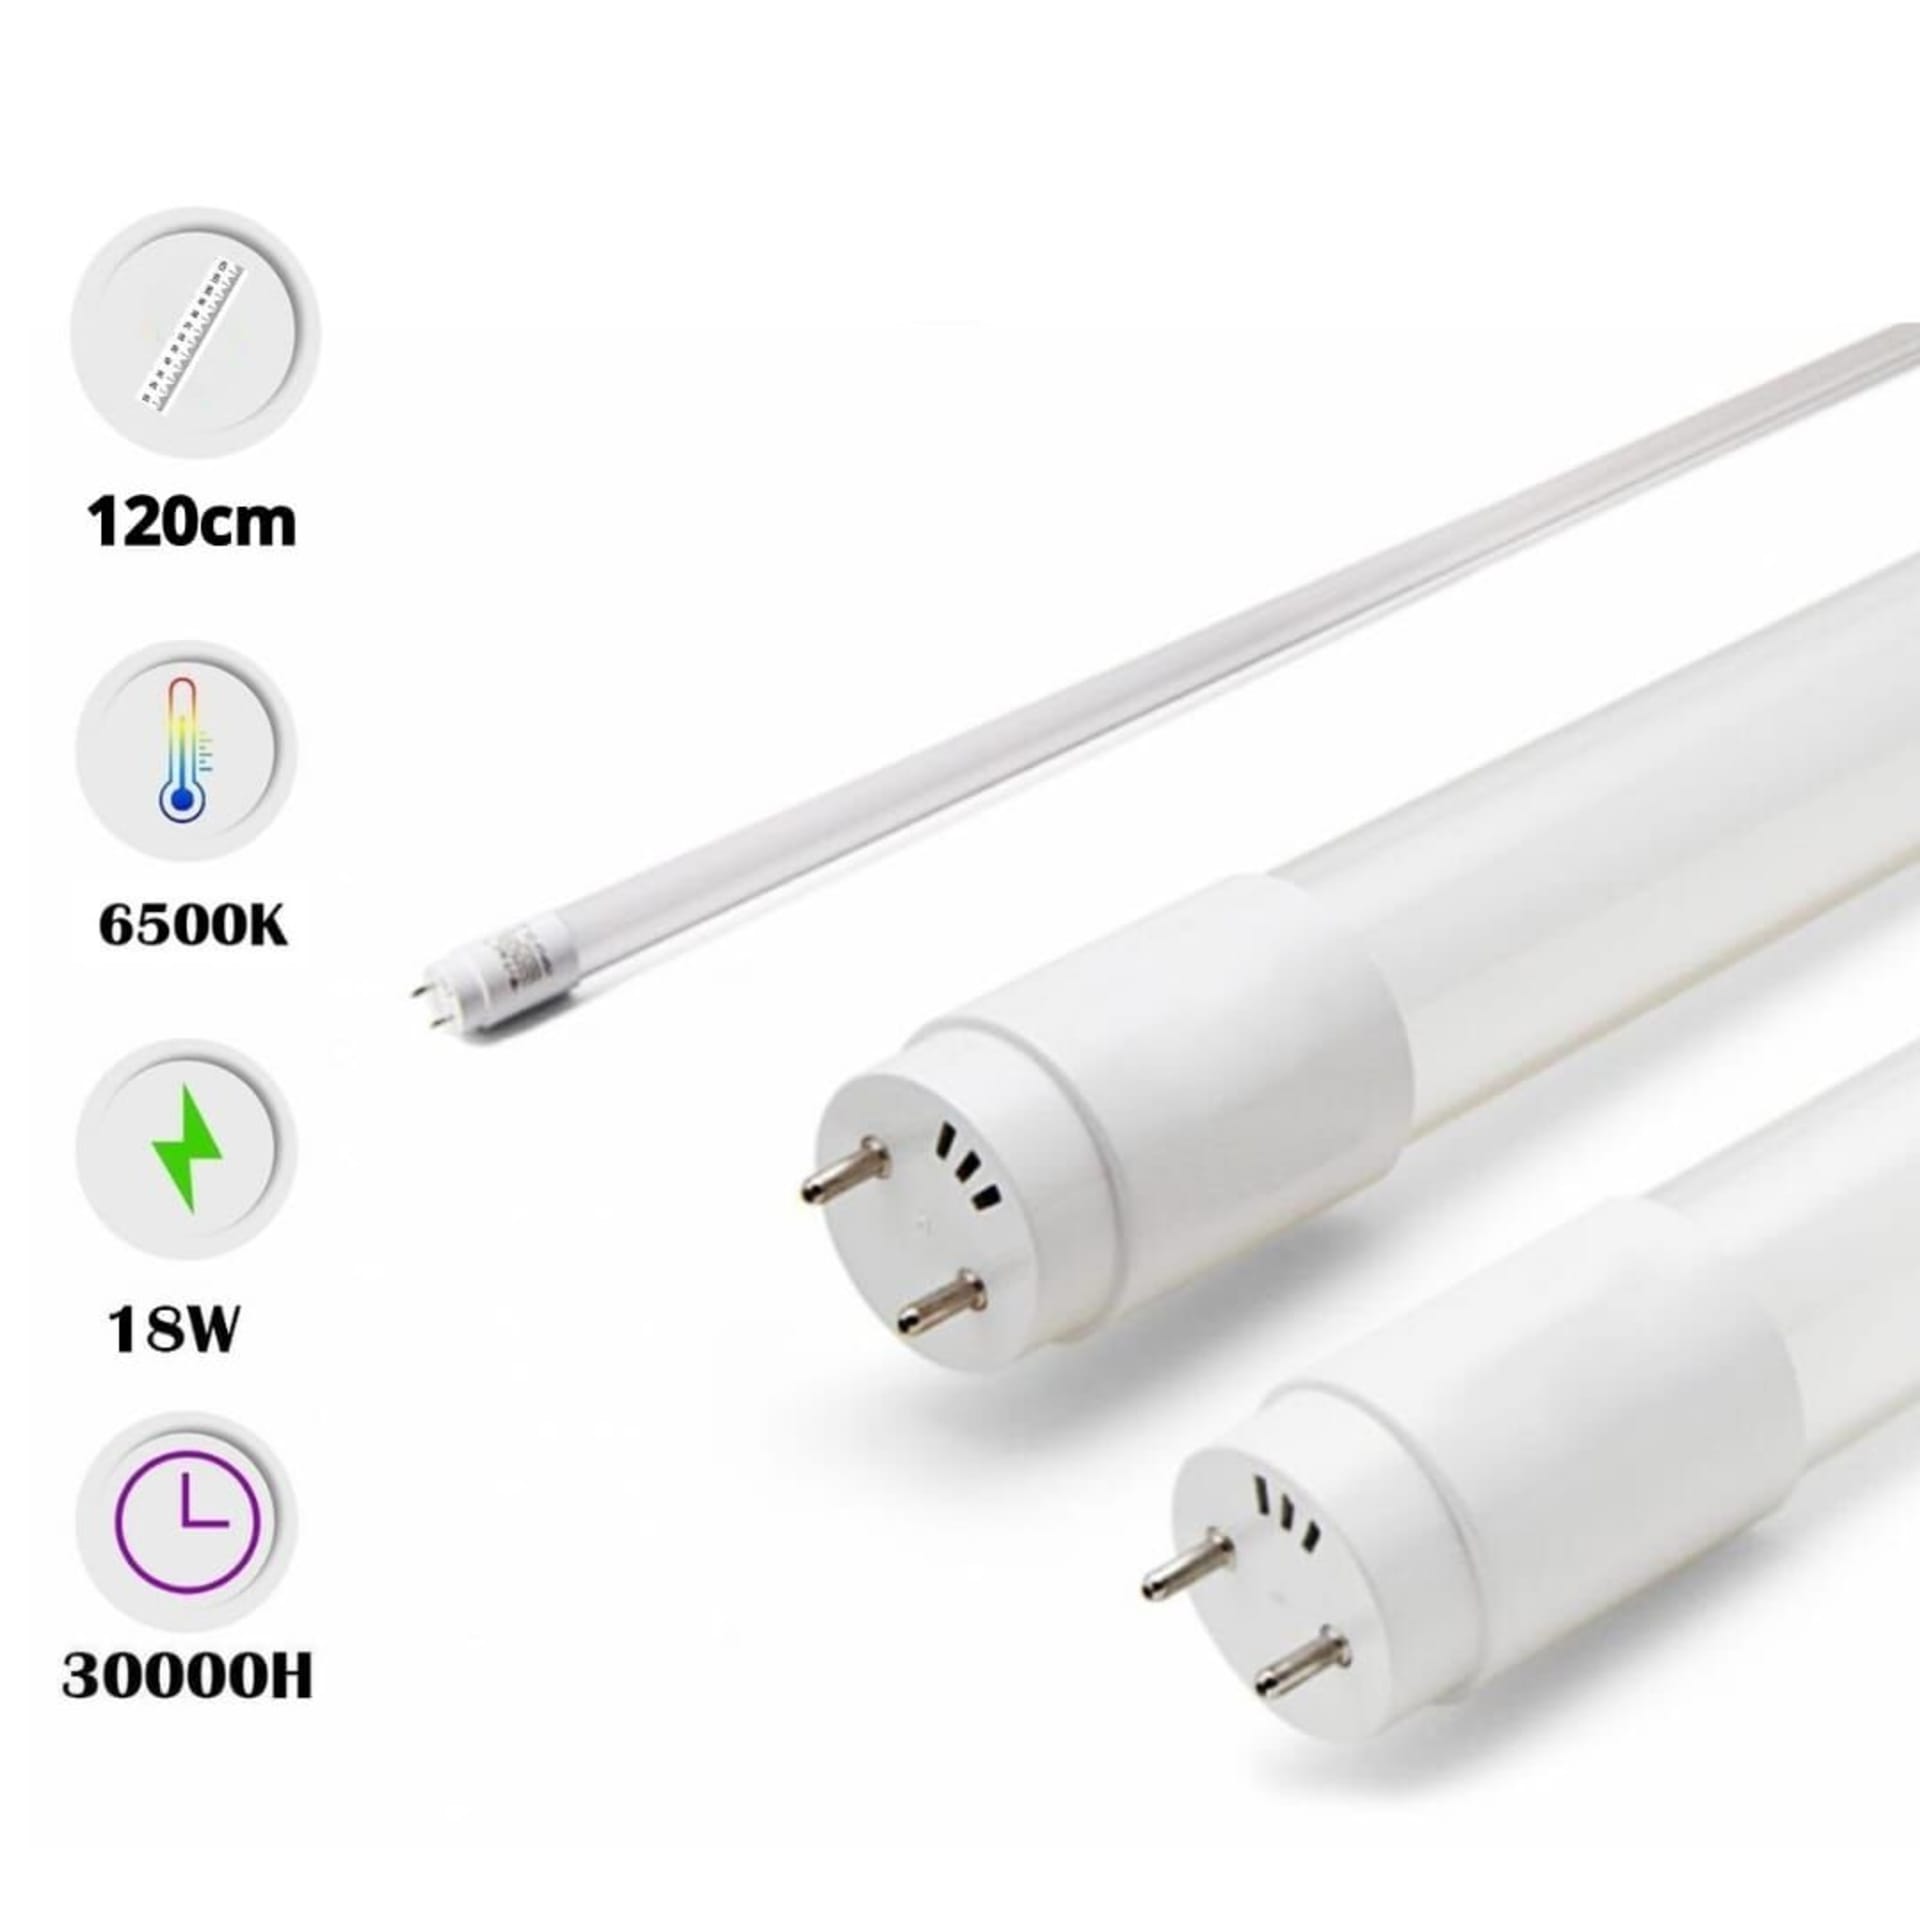 ▷ VENUS 150x LED tube T8 - 18w , 120cm 6400K cold white: buy used